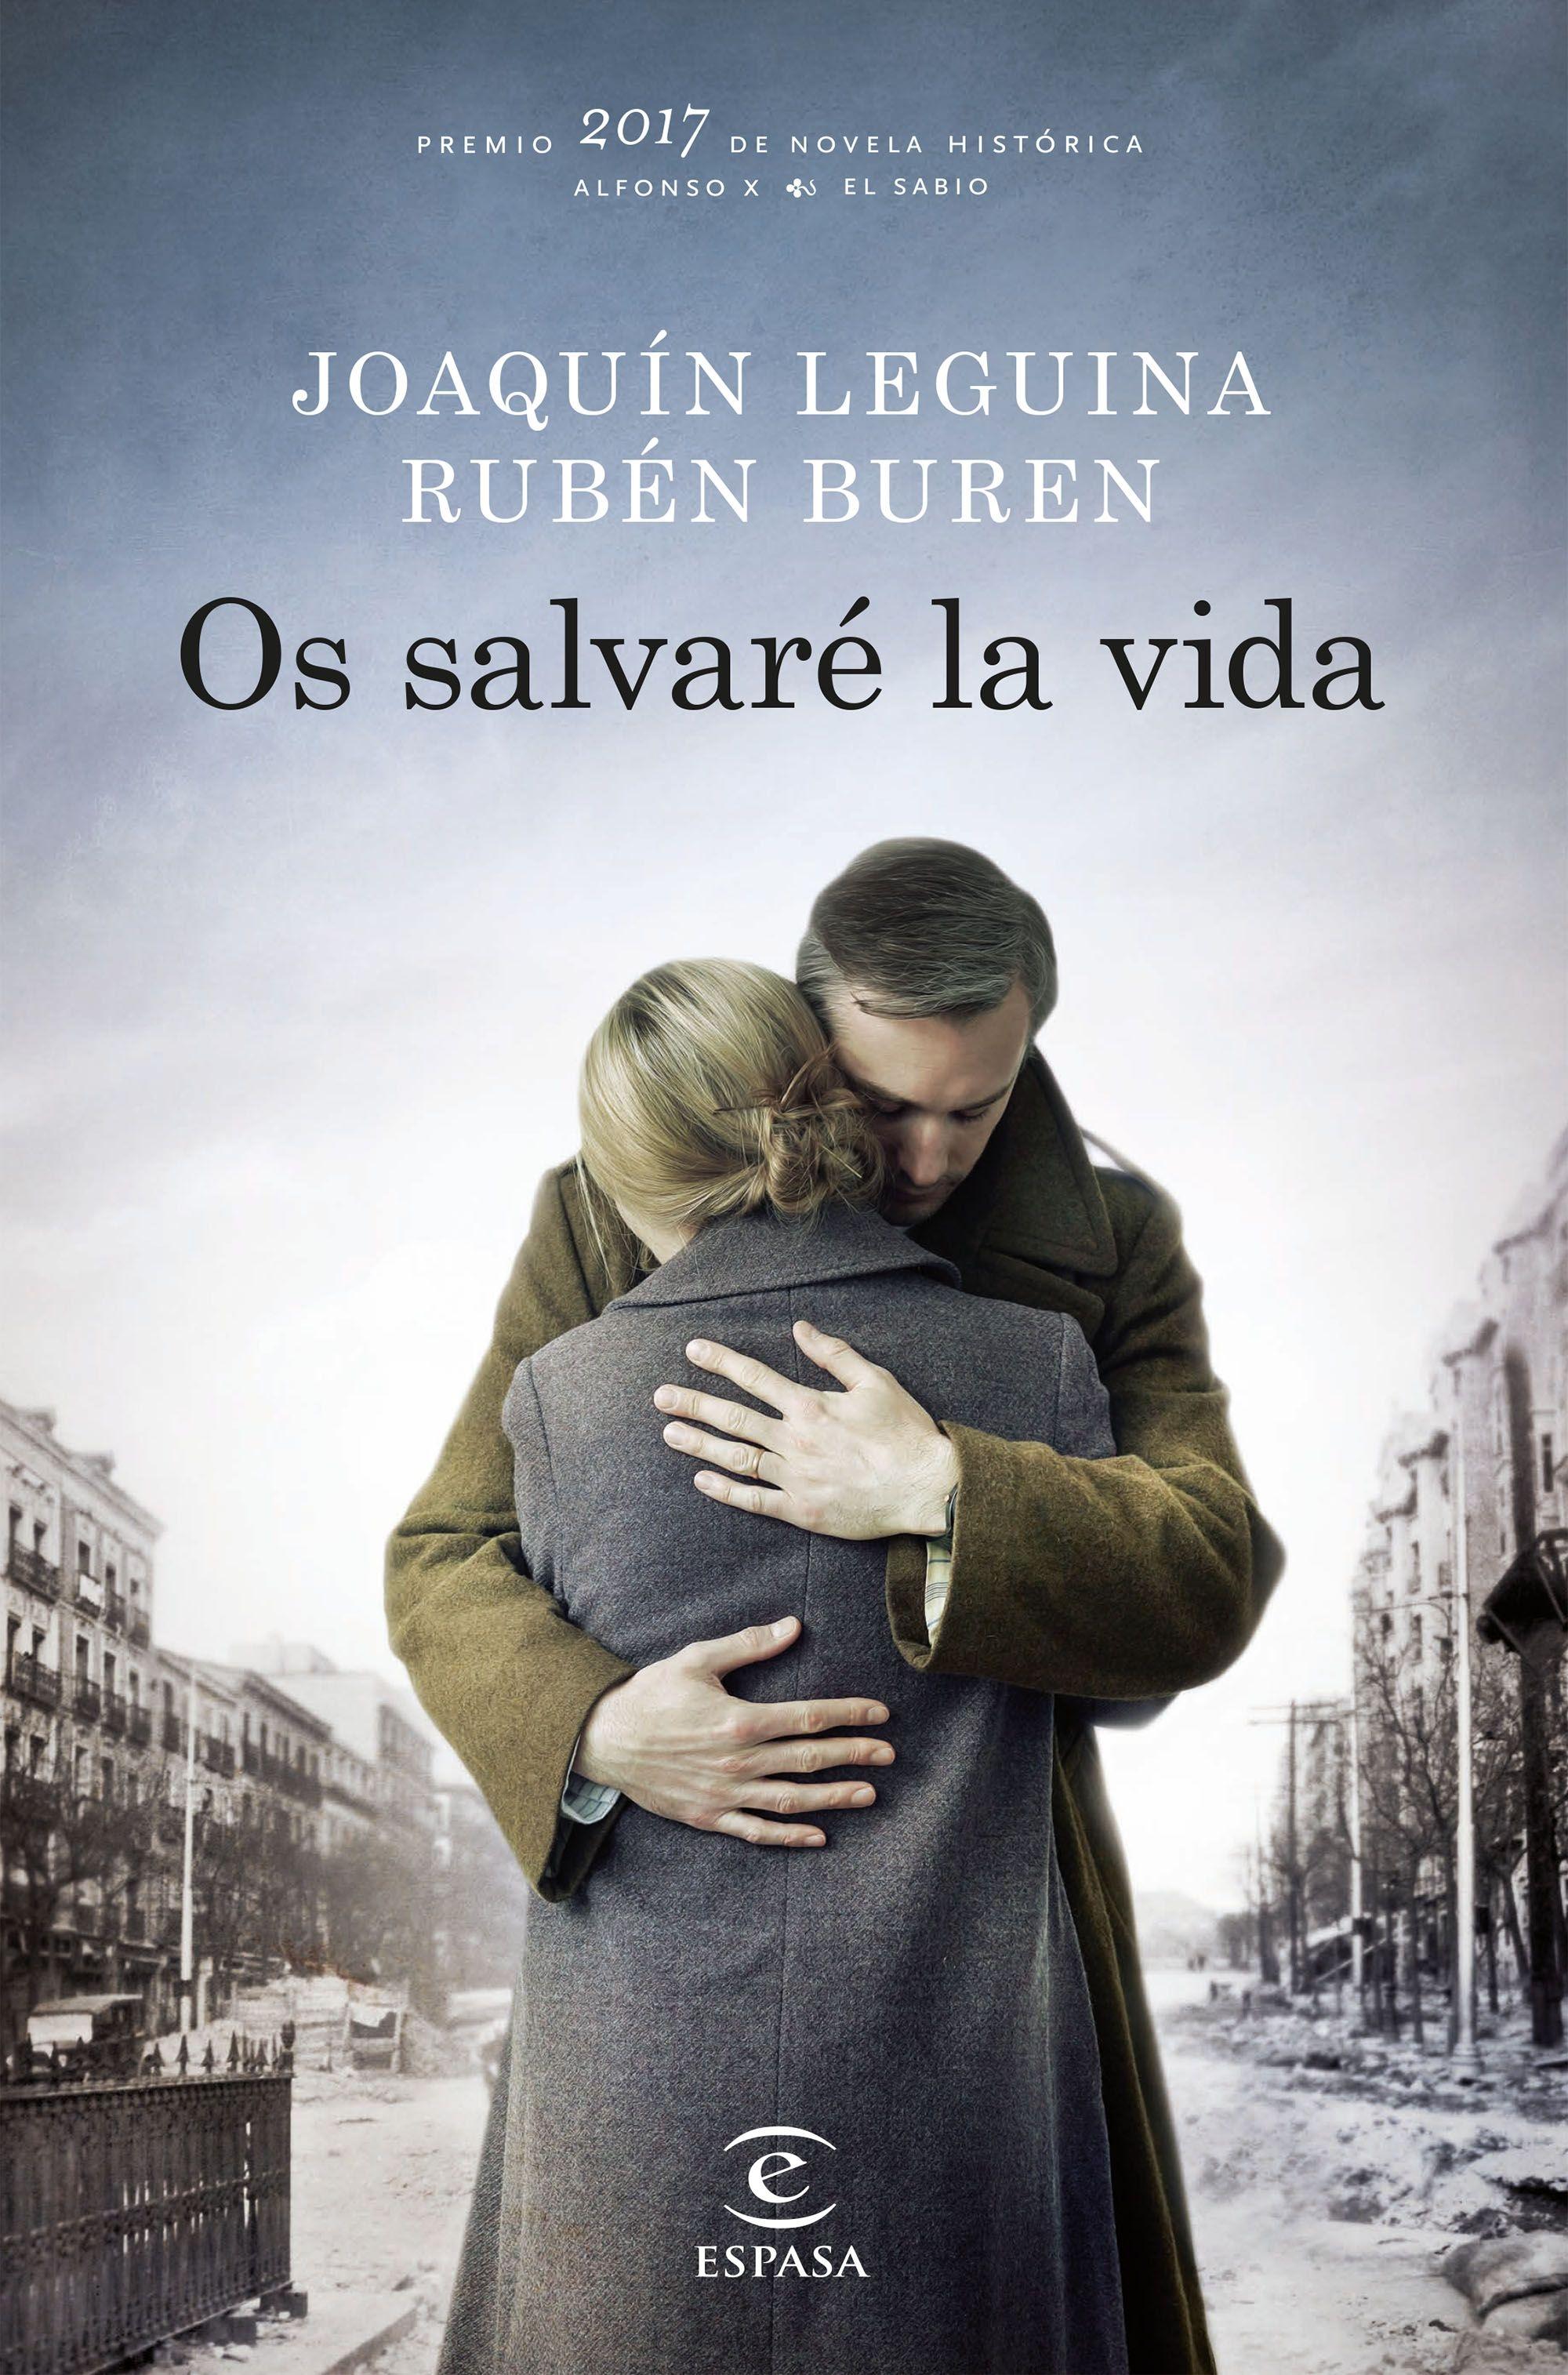 Os salvaré la vida "Premio 2017 de Novela Histórica Alfonso X El Sabio"